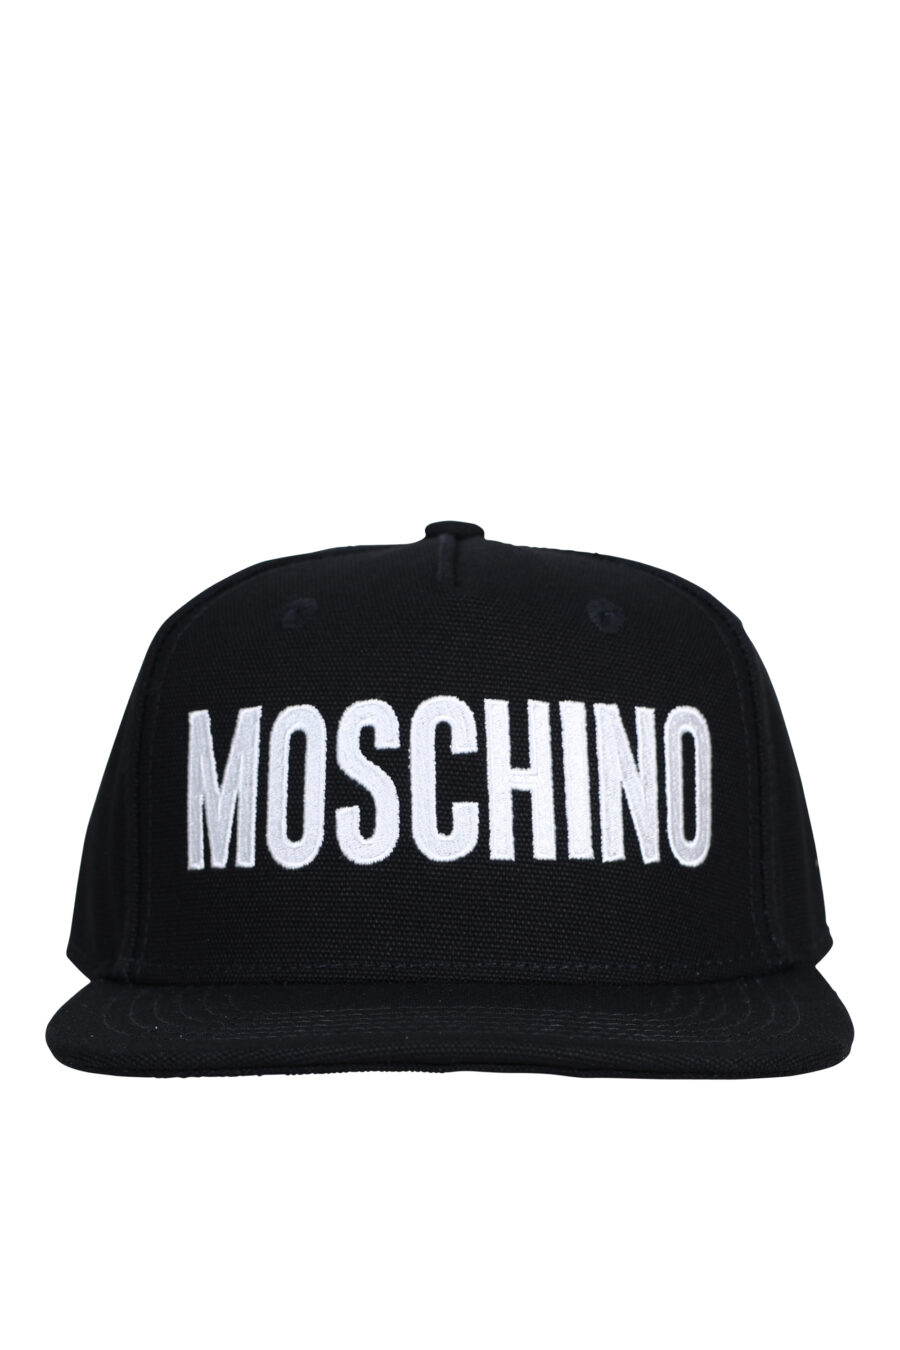 Moschino - Gorra negra con maxilogo blanco - BLS Fashion